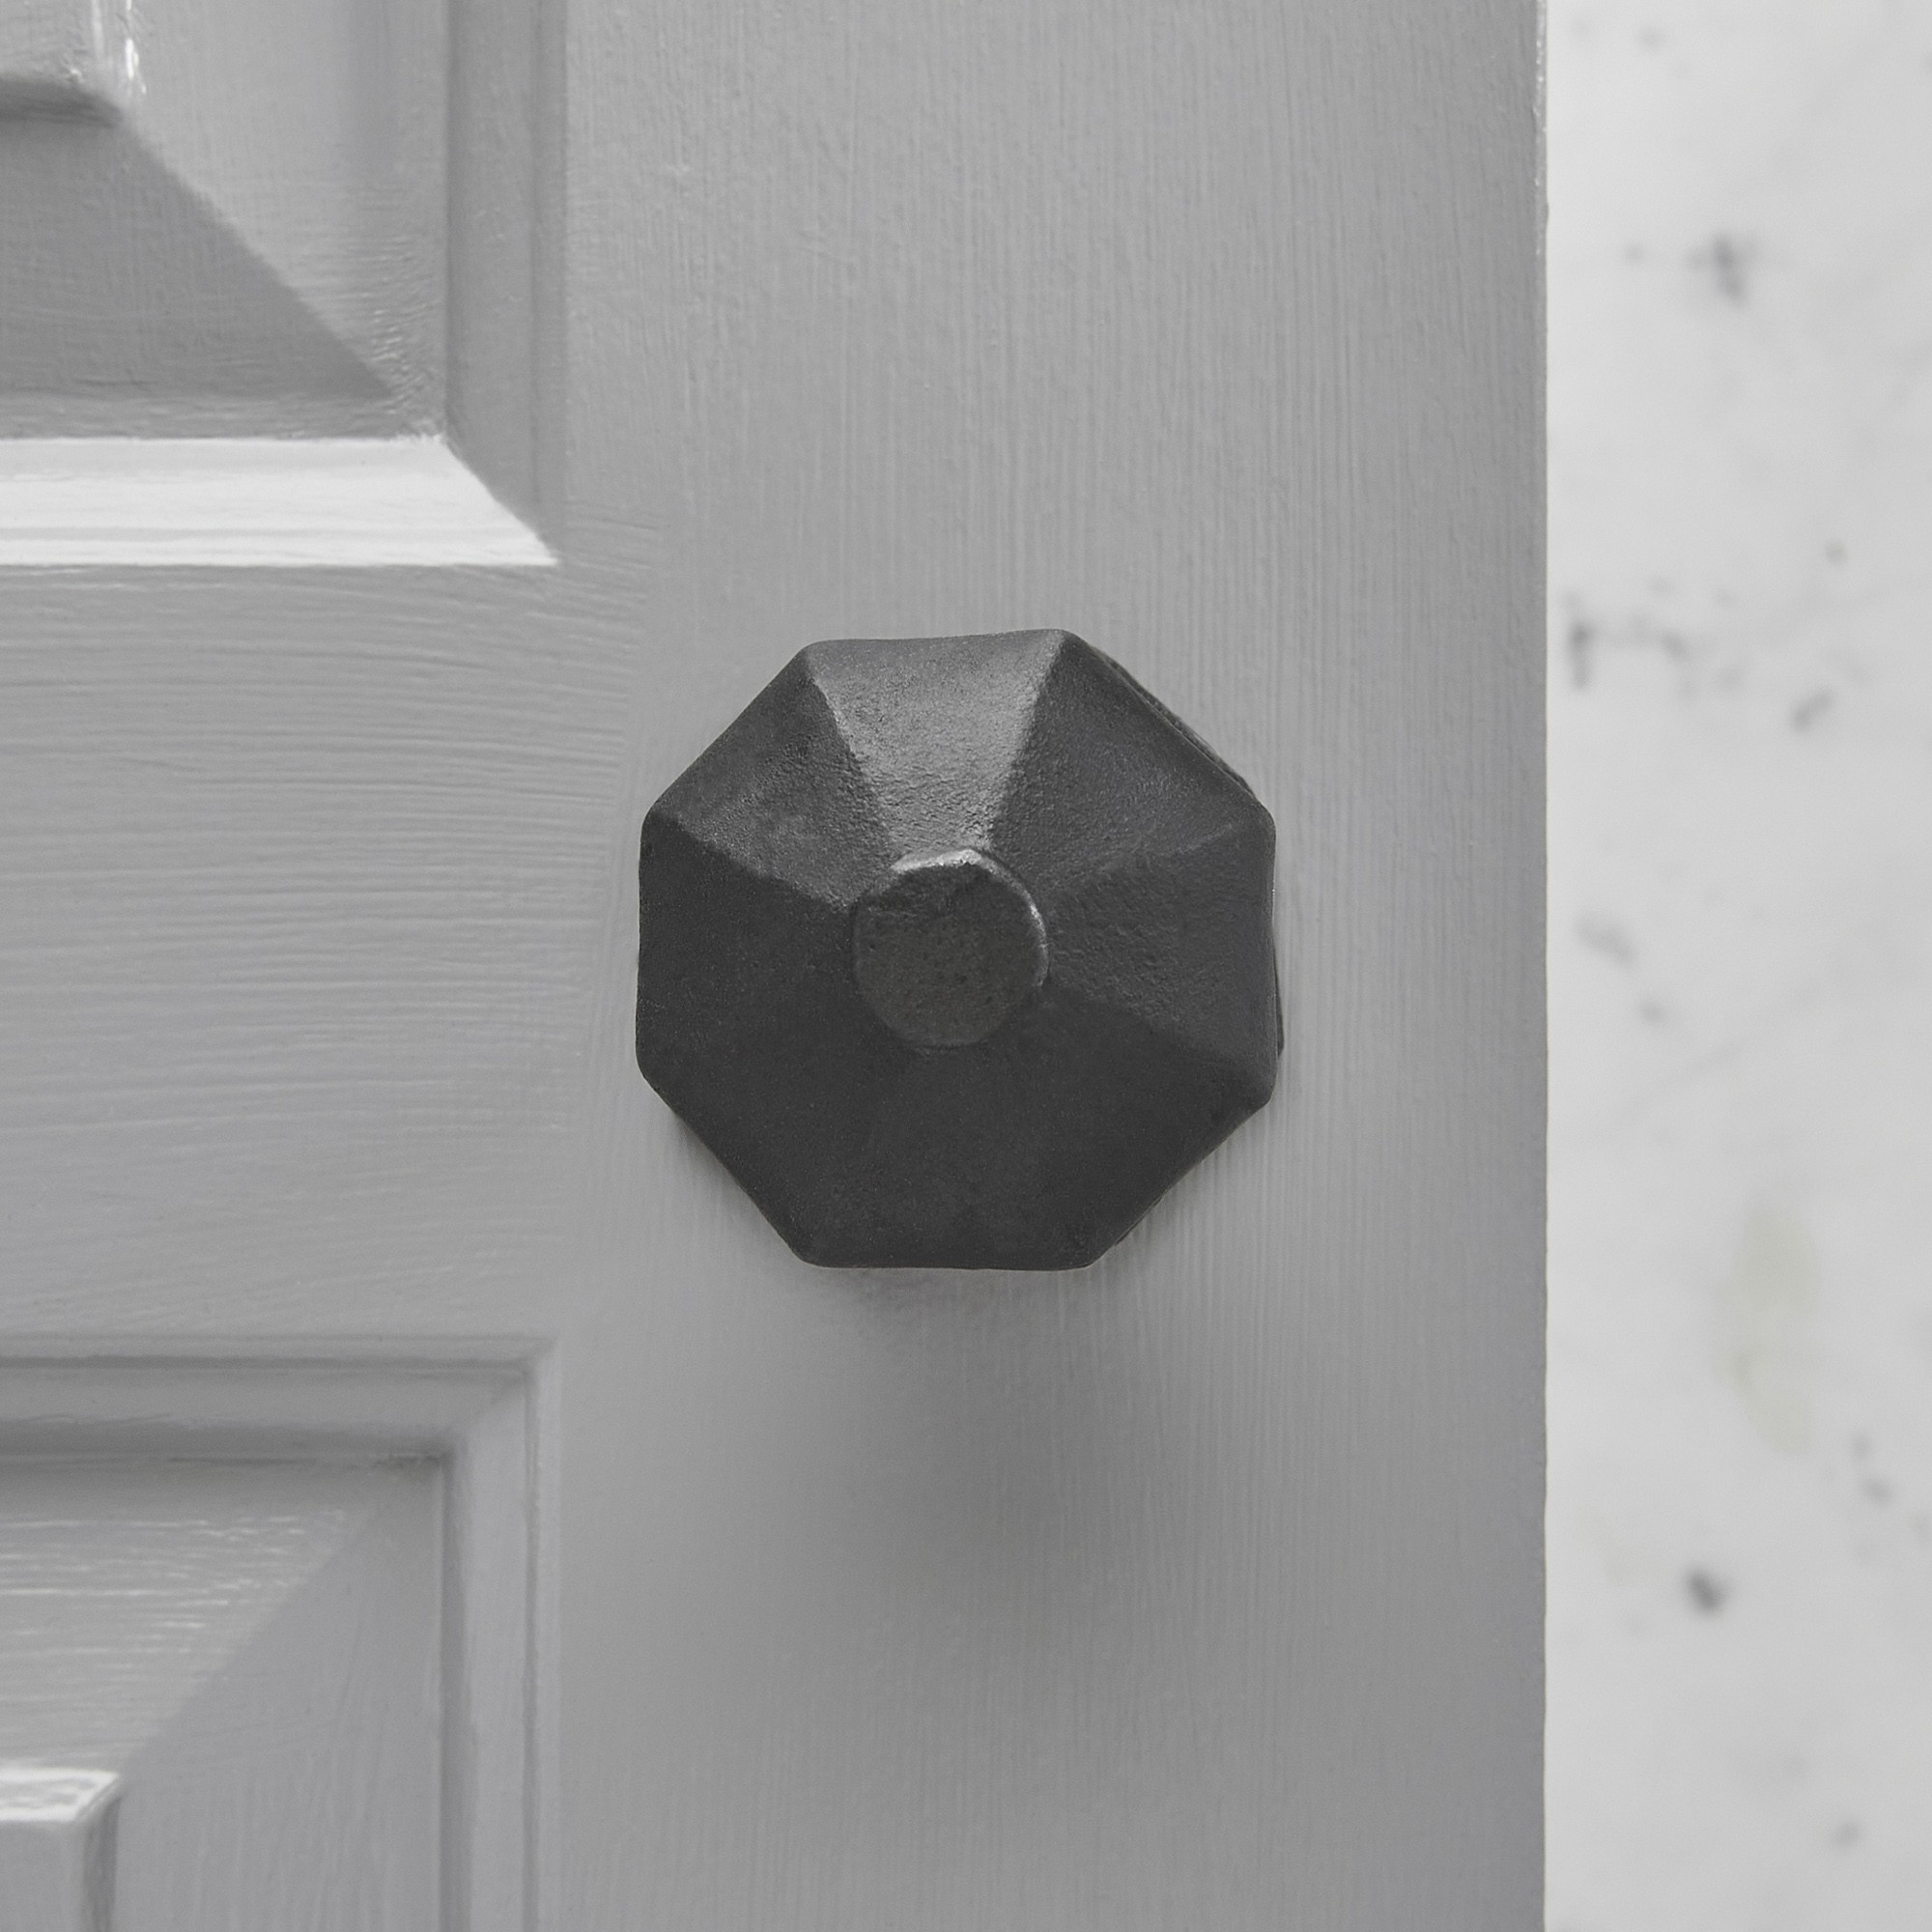 octagonal-forged-door-knobs-pair-black-waxed2